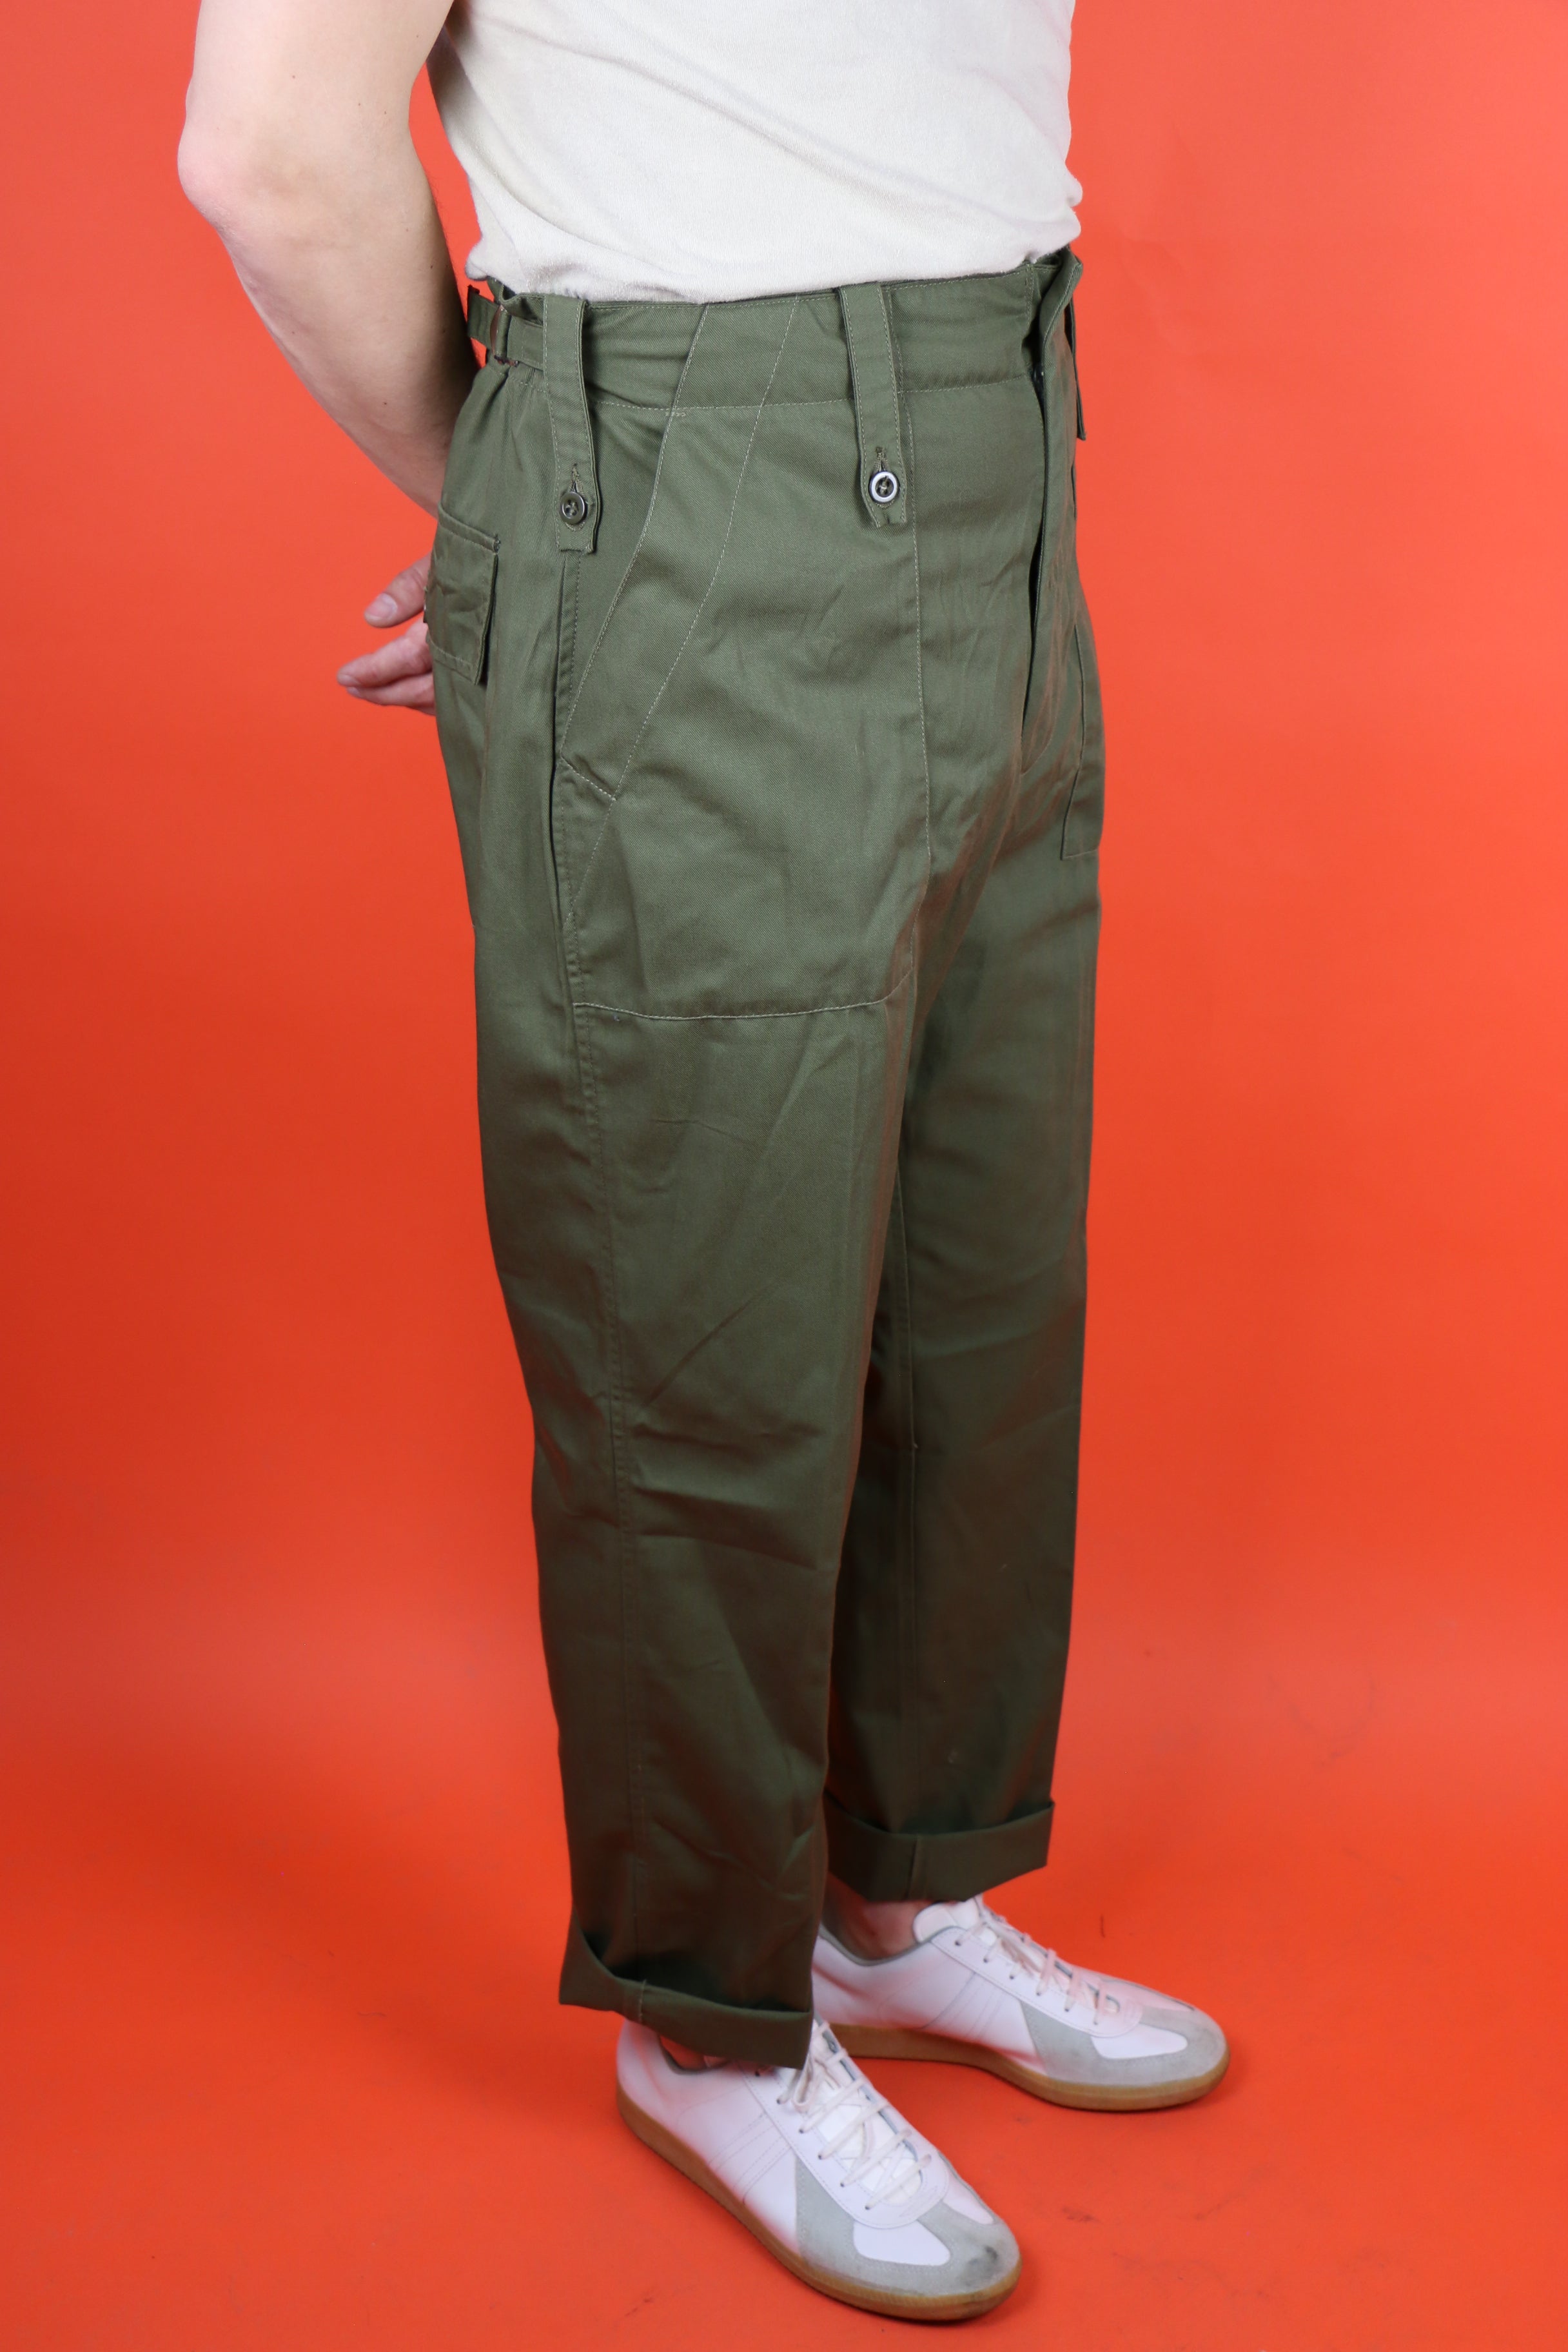 British Army Fatigue Pants ~ Vintage Store Clochard92.com